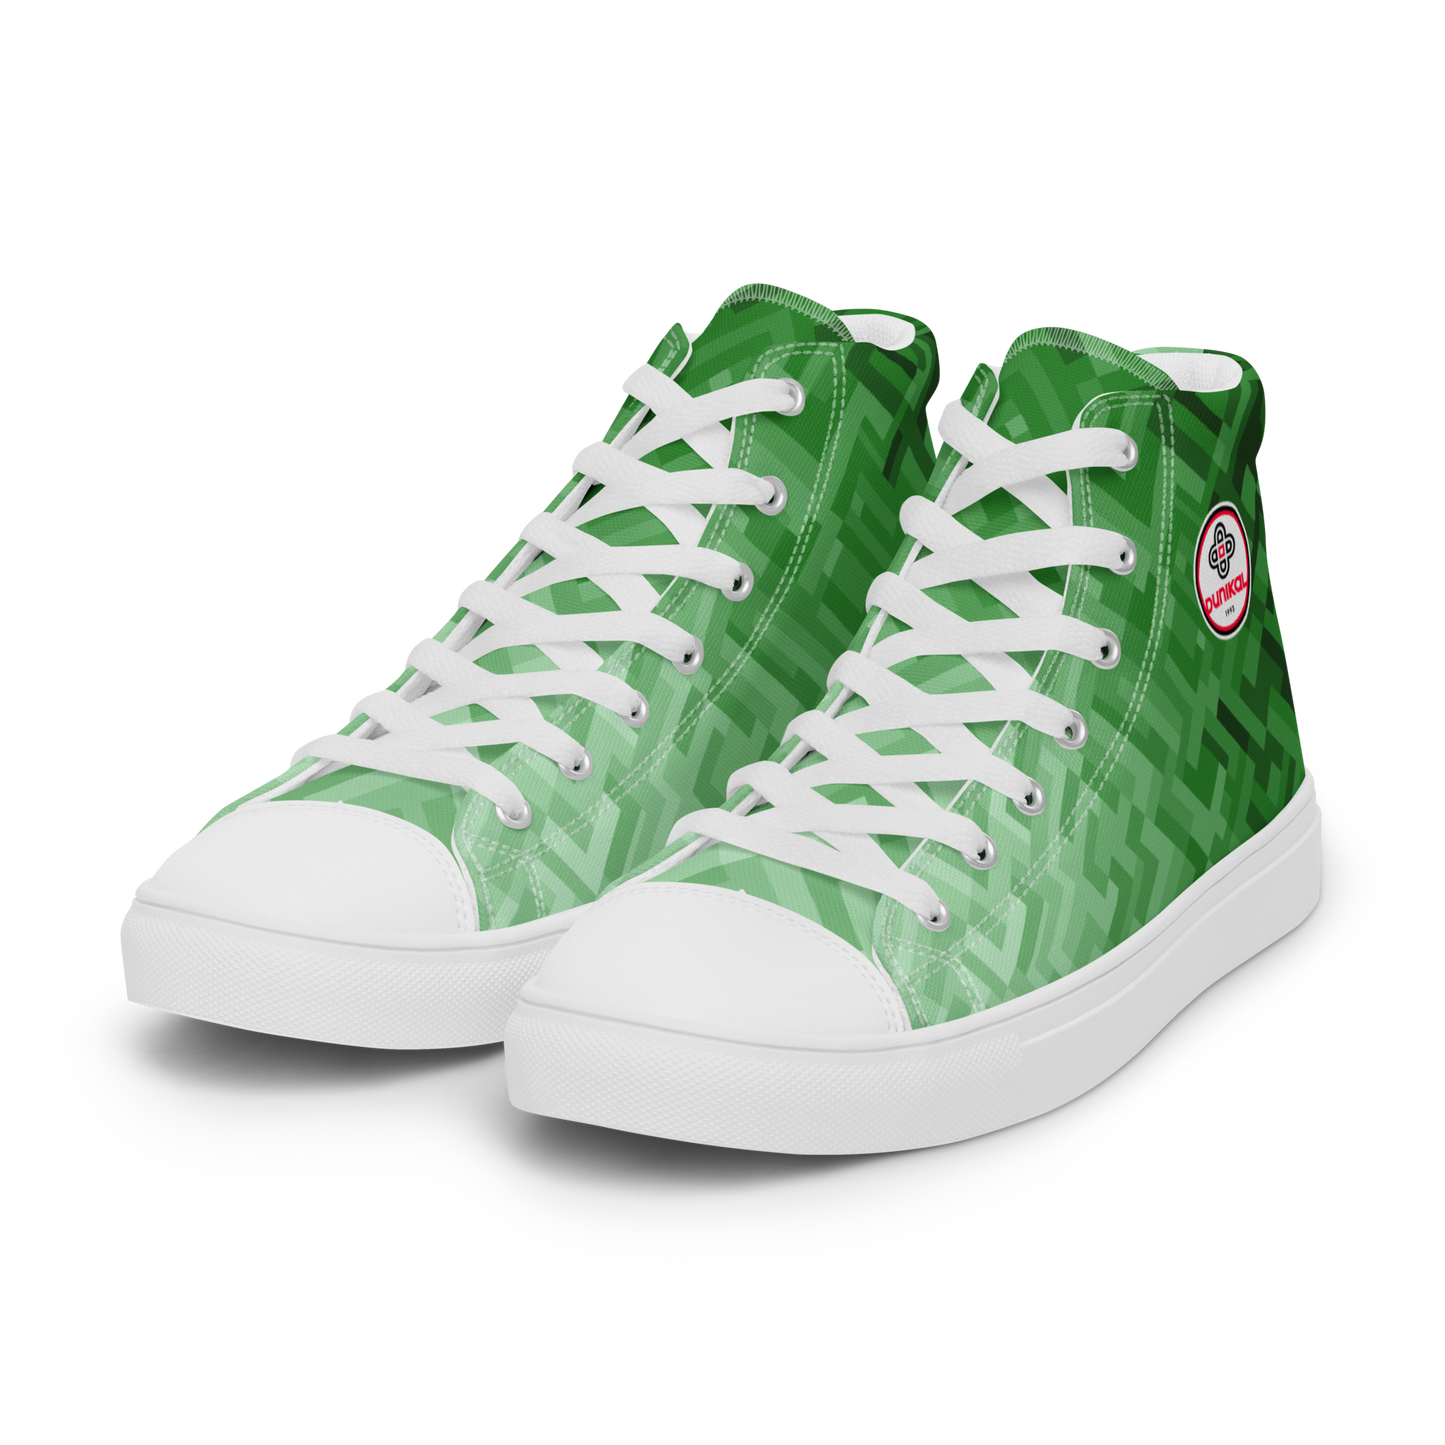 Men's Canvas Sneakers ❯ Polygonal Gradient ❯ Forest Green